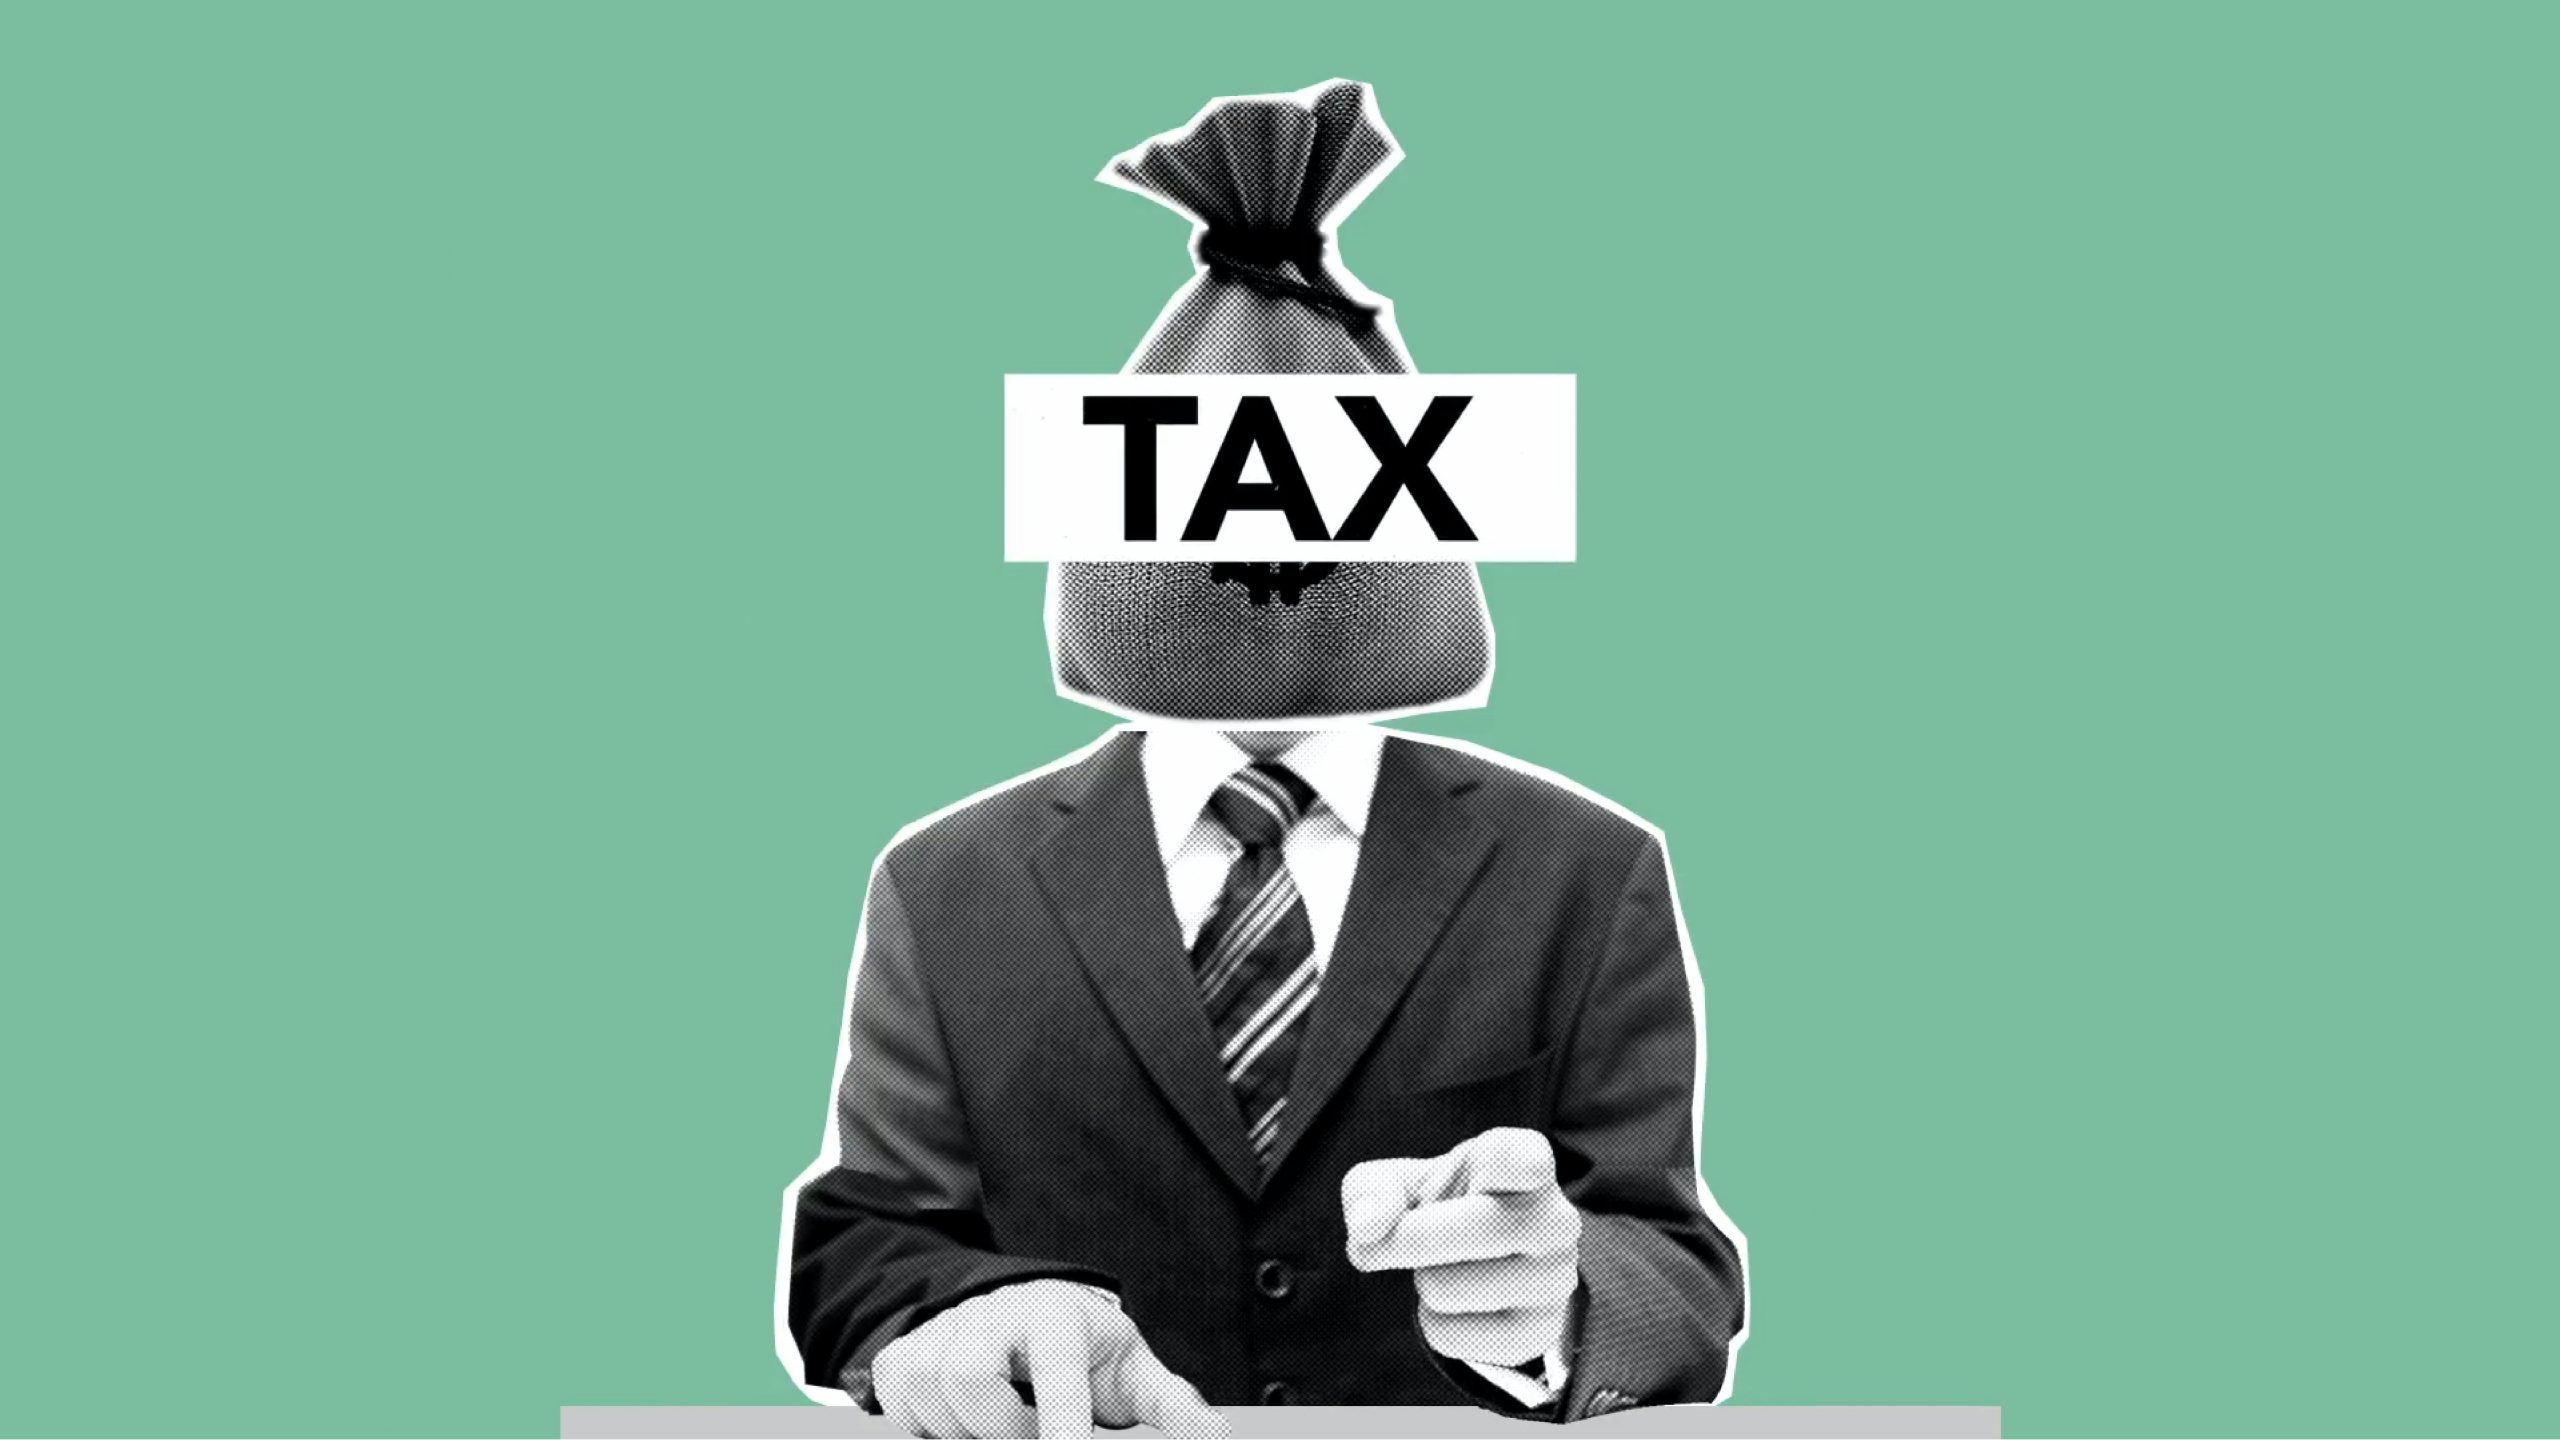 Pahami Profesi Tax Law, Spesialisasi Bidang Hukum dan Perpajakan